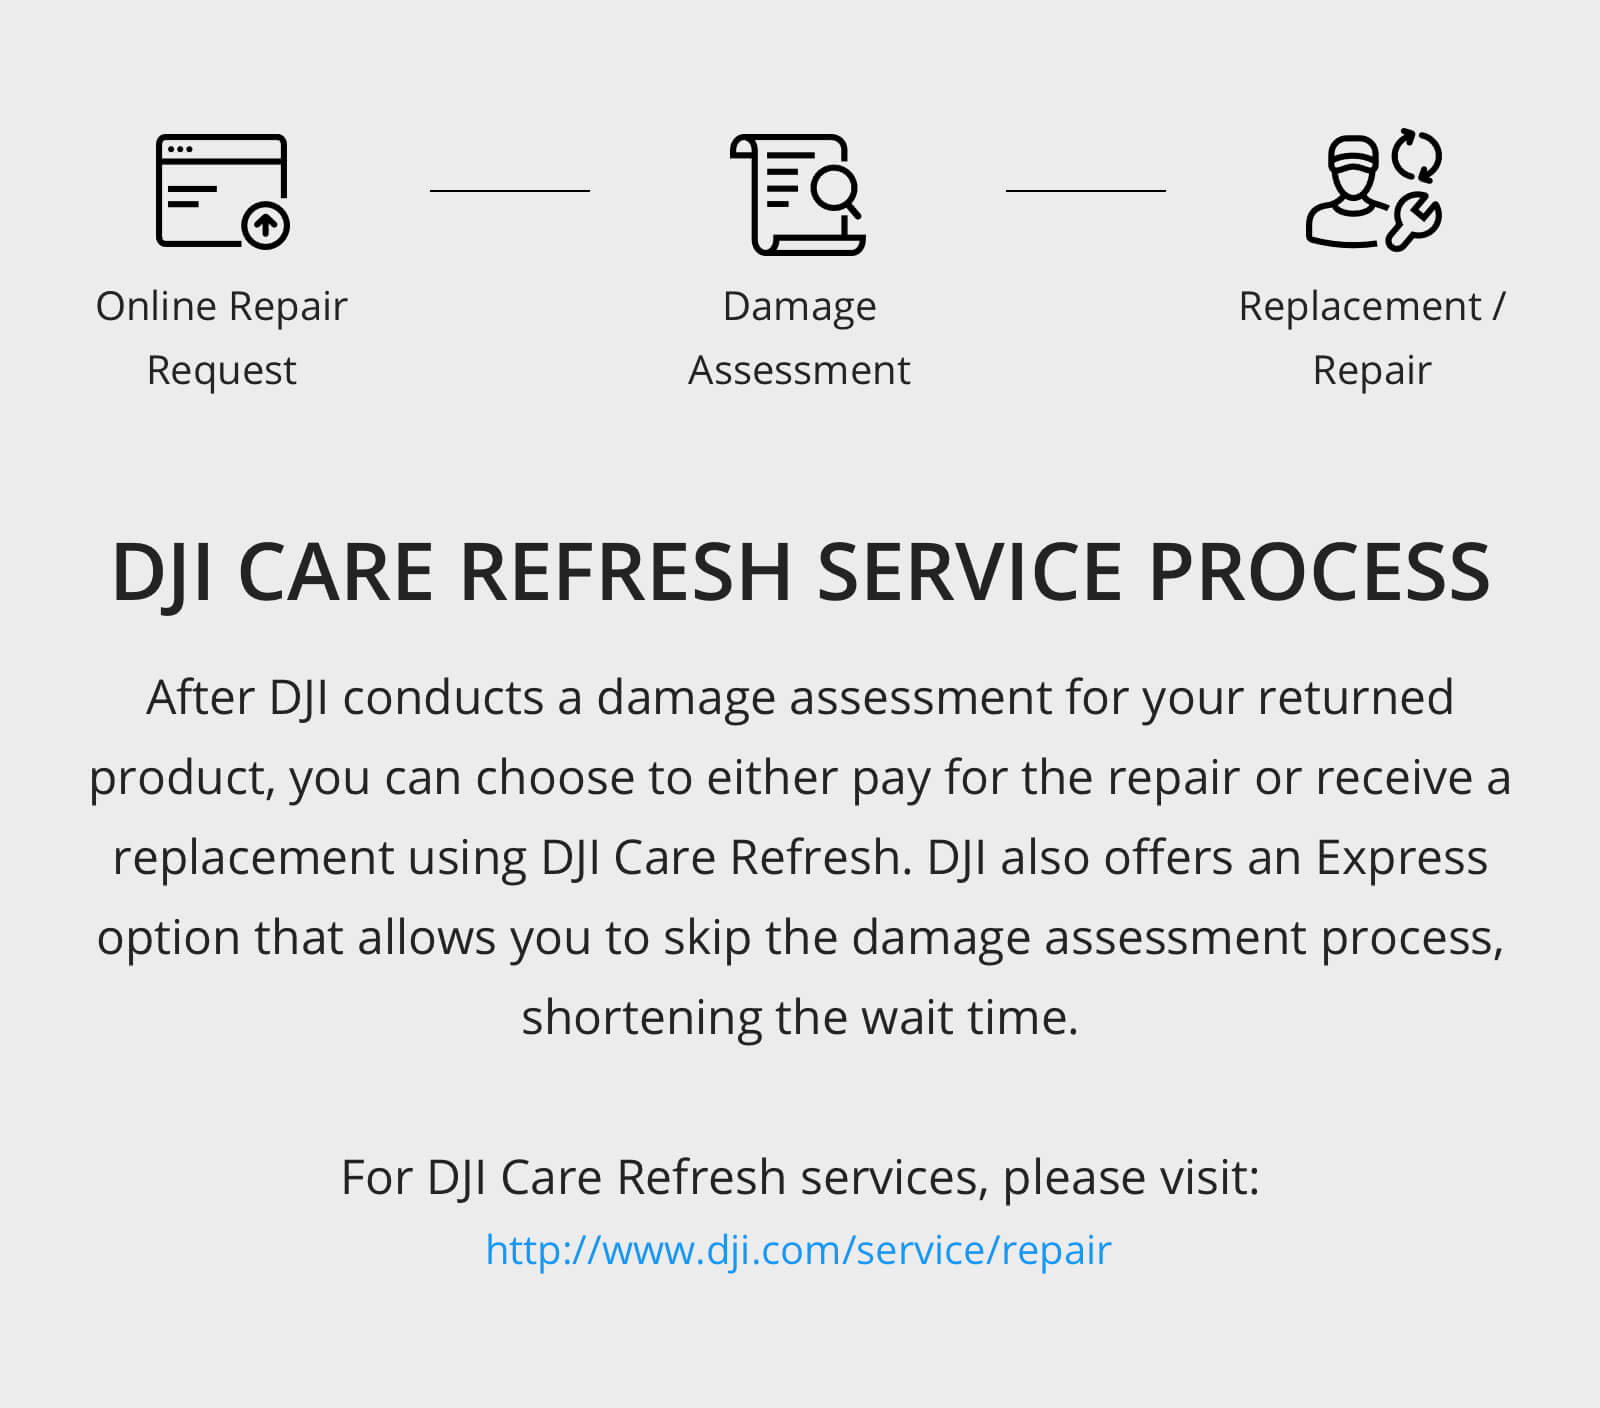 DJI Care Refresh Service